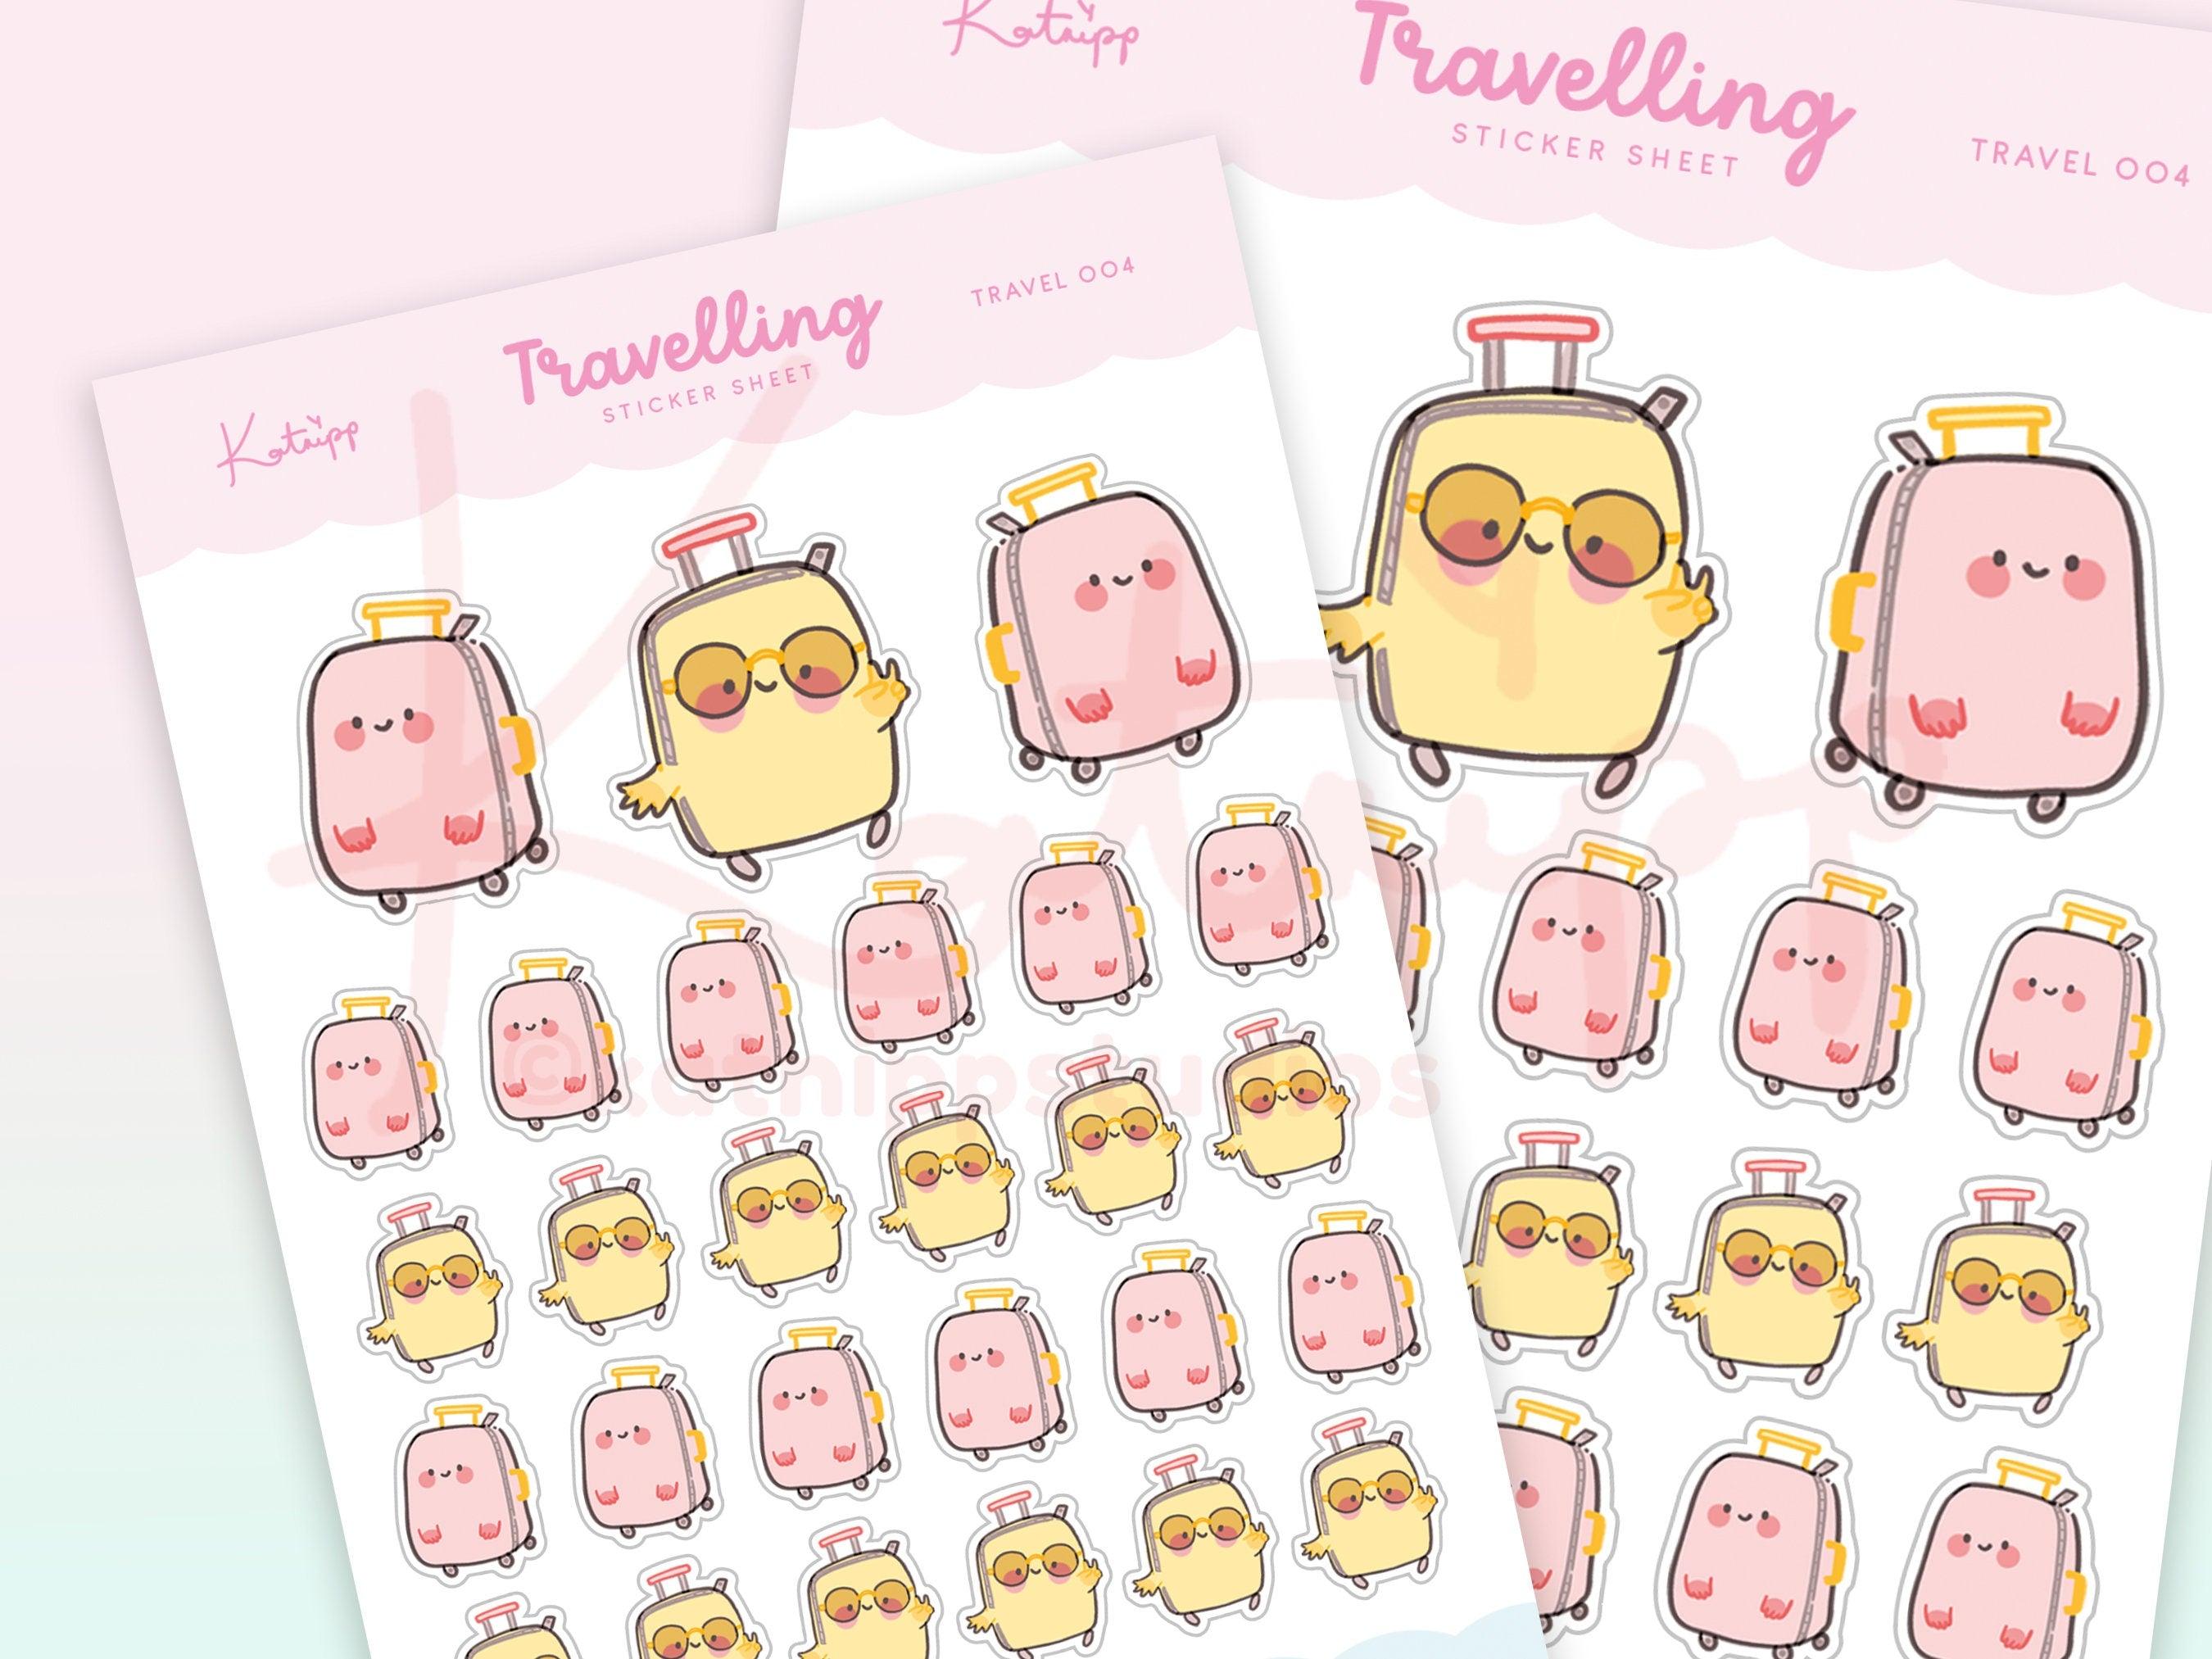 Suitcase Travel Planner Stickers ~ TRAVEL004 - Katnipp Illustrations